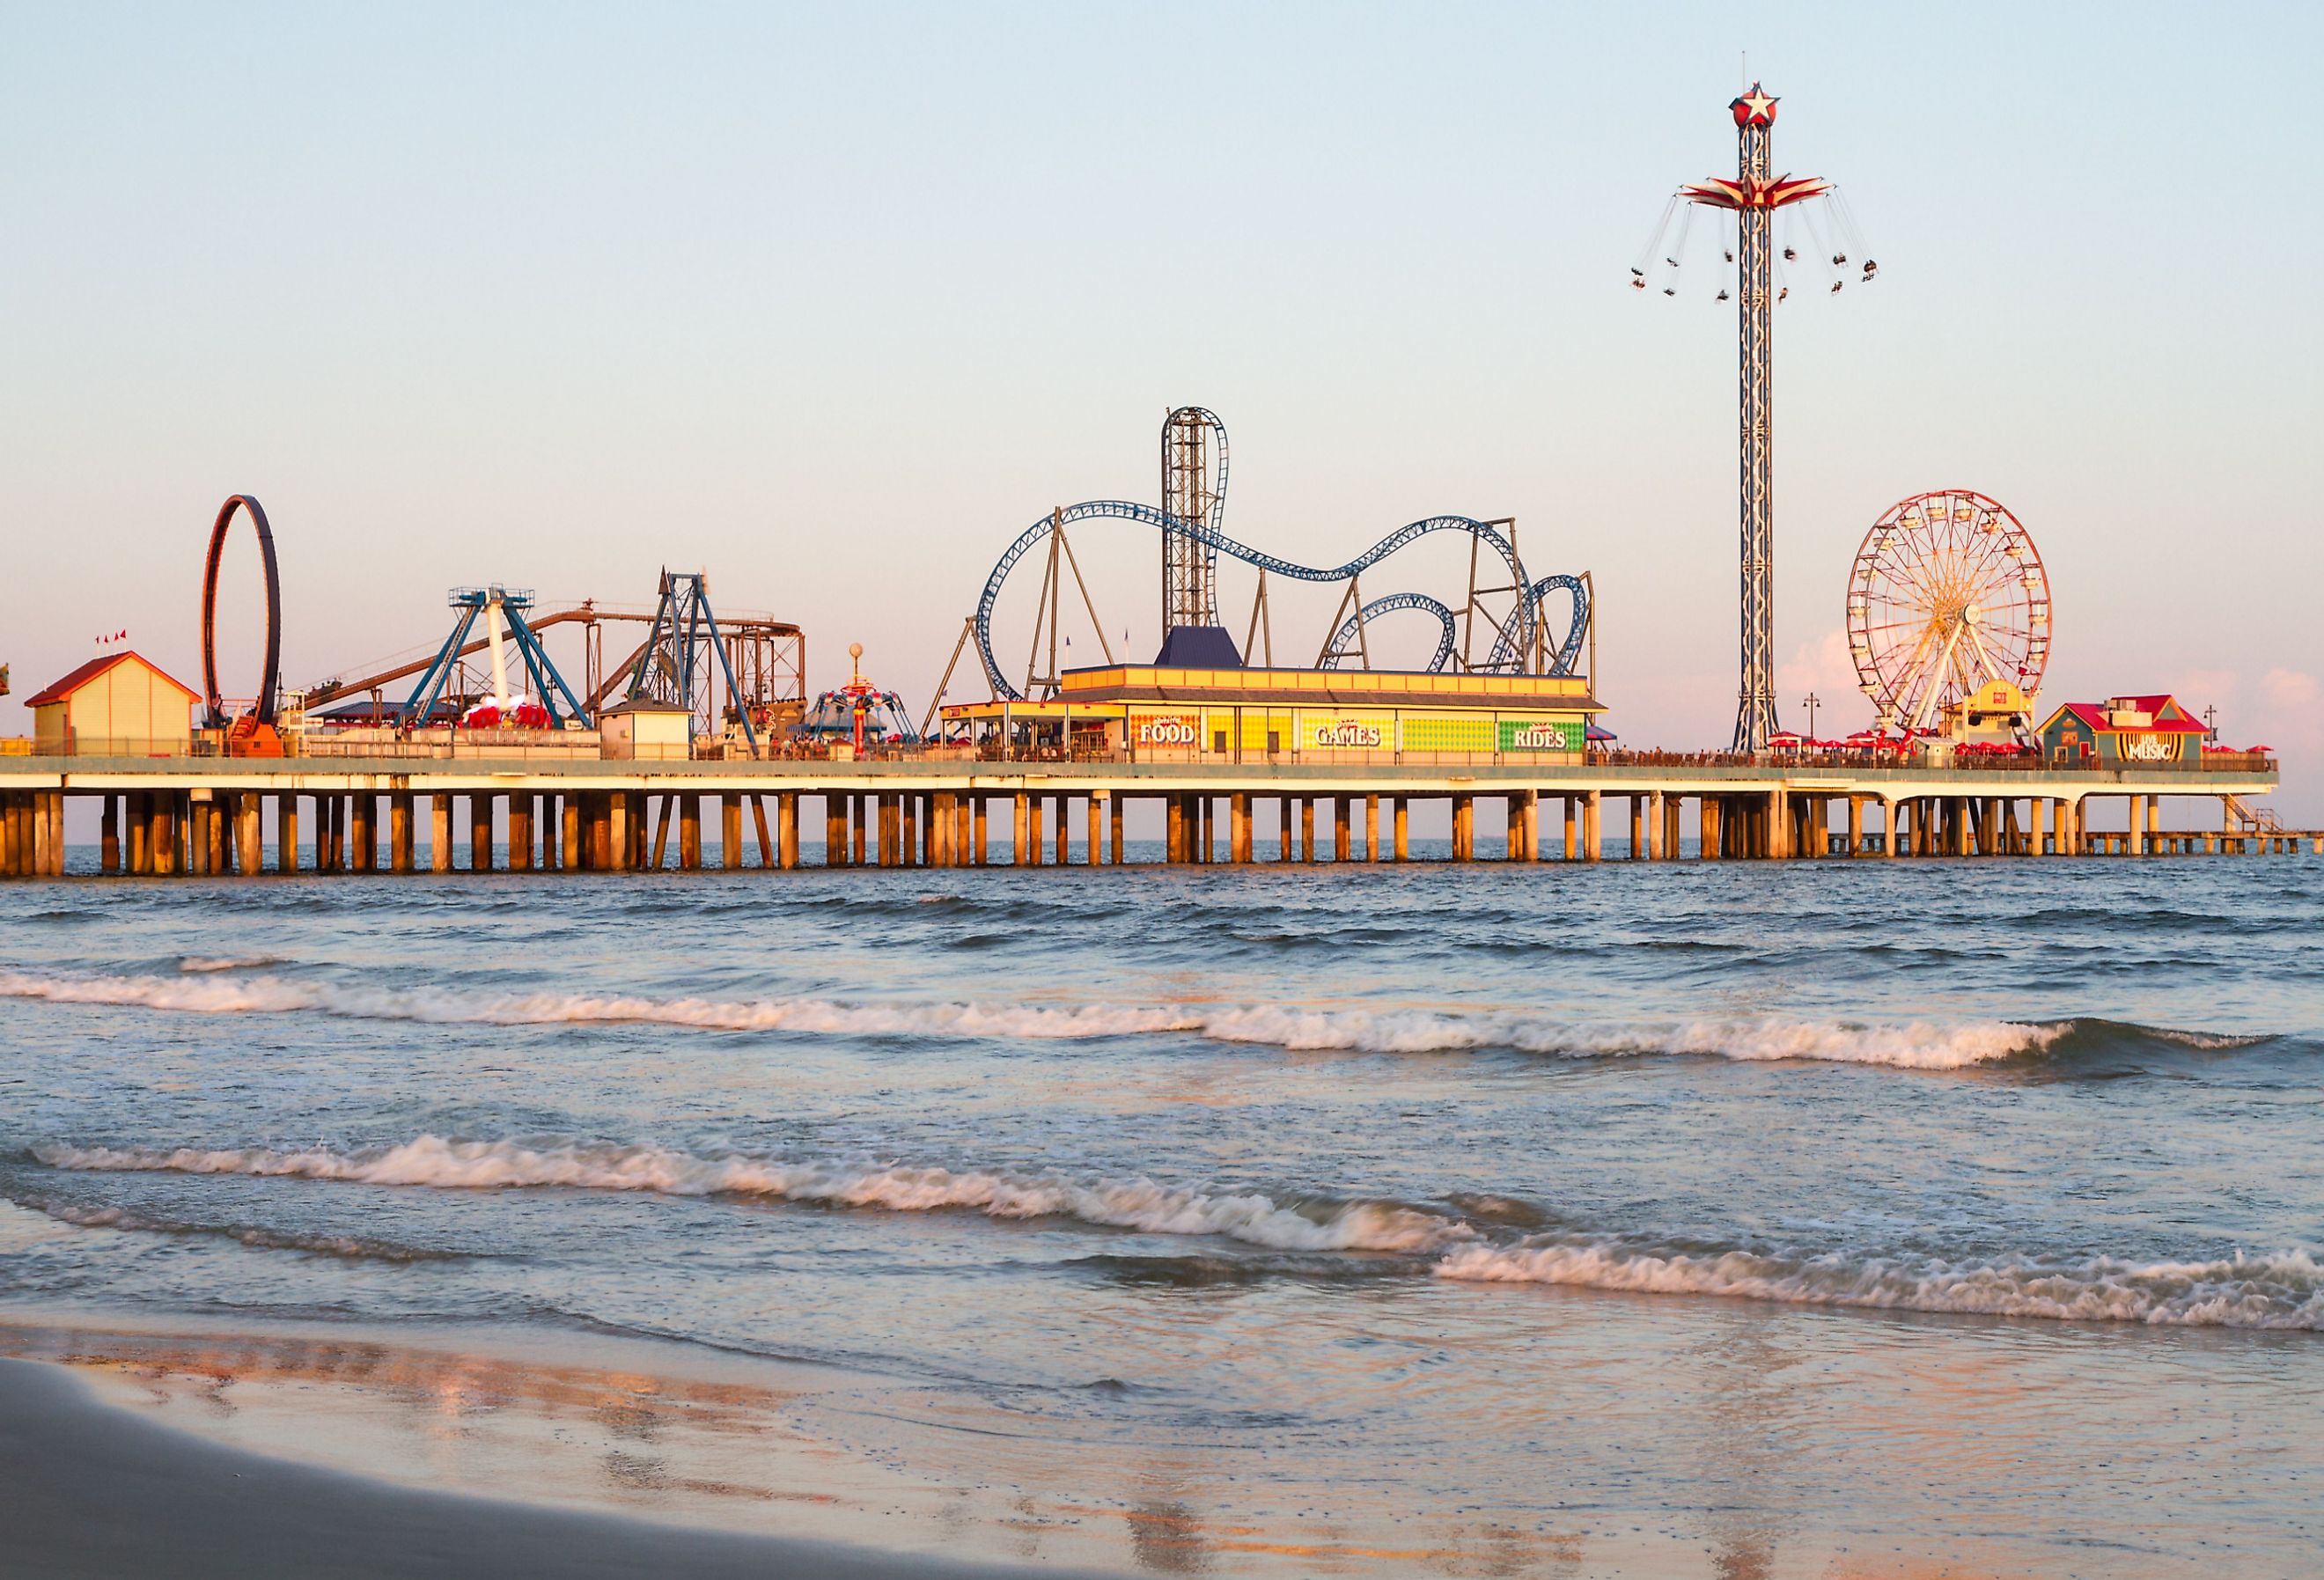 Galveston Island and beach with theme park on the pier. Image credit Carlos Bruzos Valin via Shutterstock.